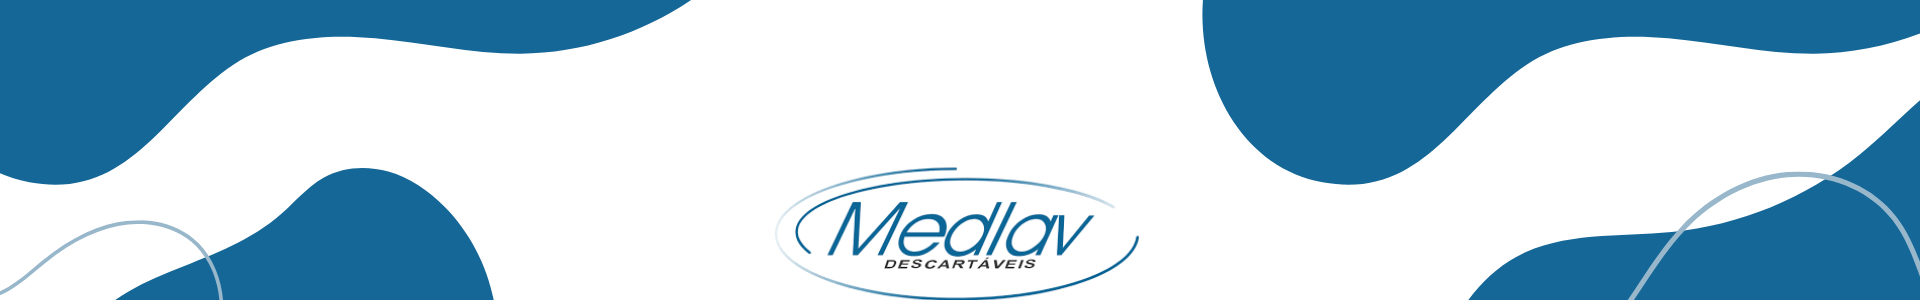 Marca Medlav Descartáveis